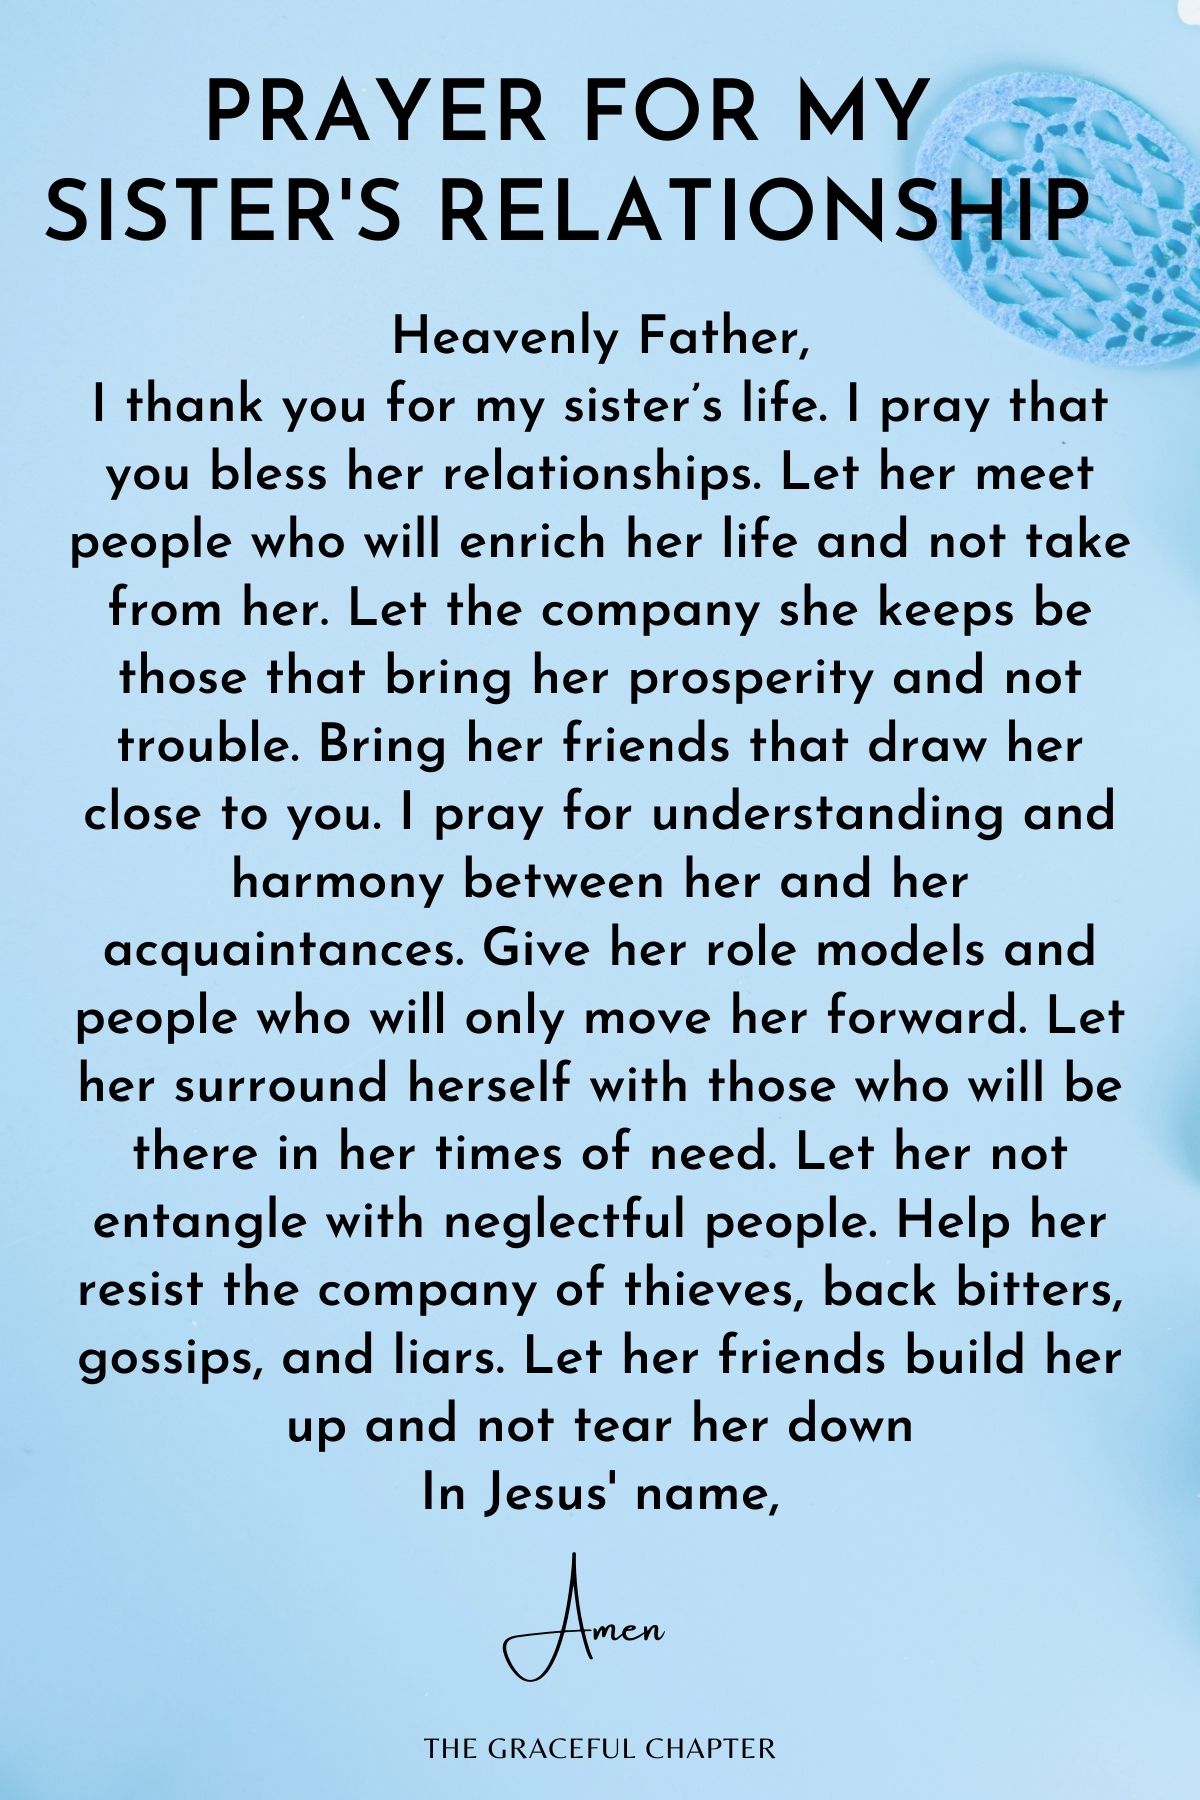 Prayer for my Sister's Relationship